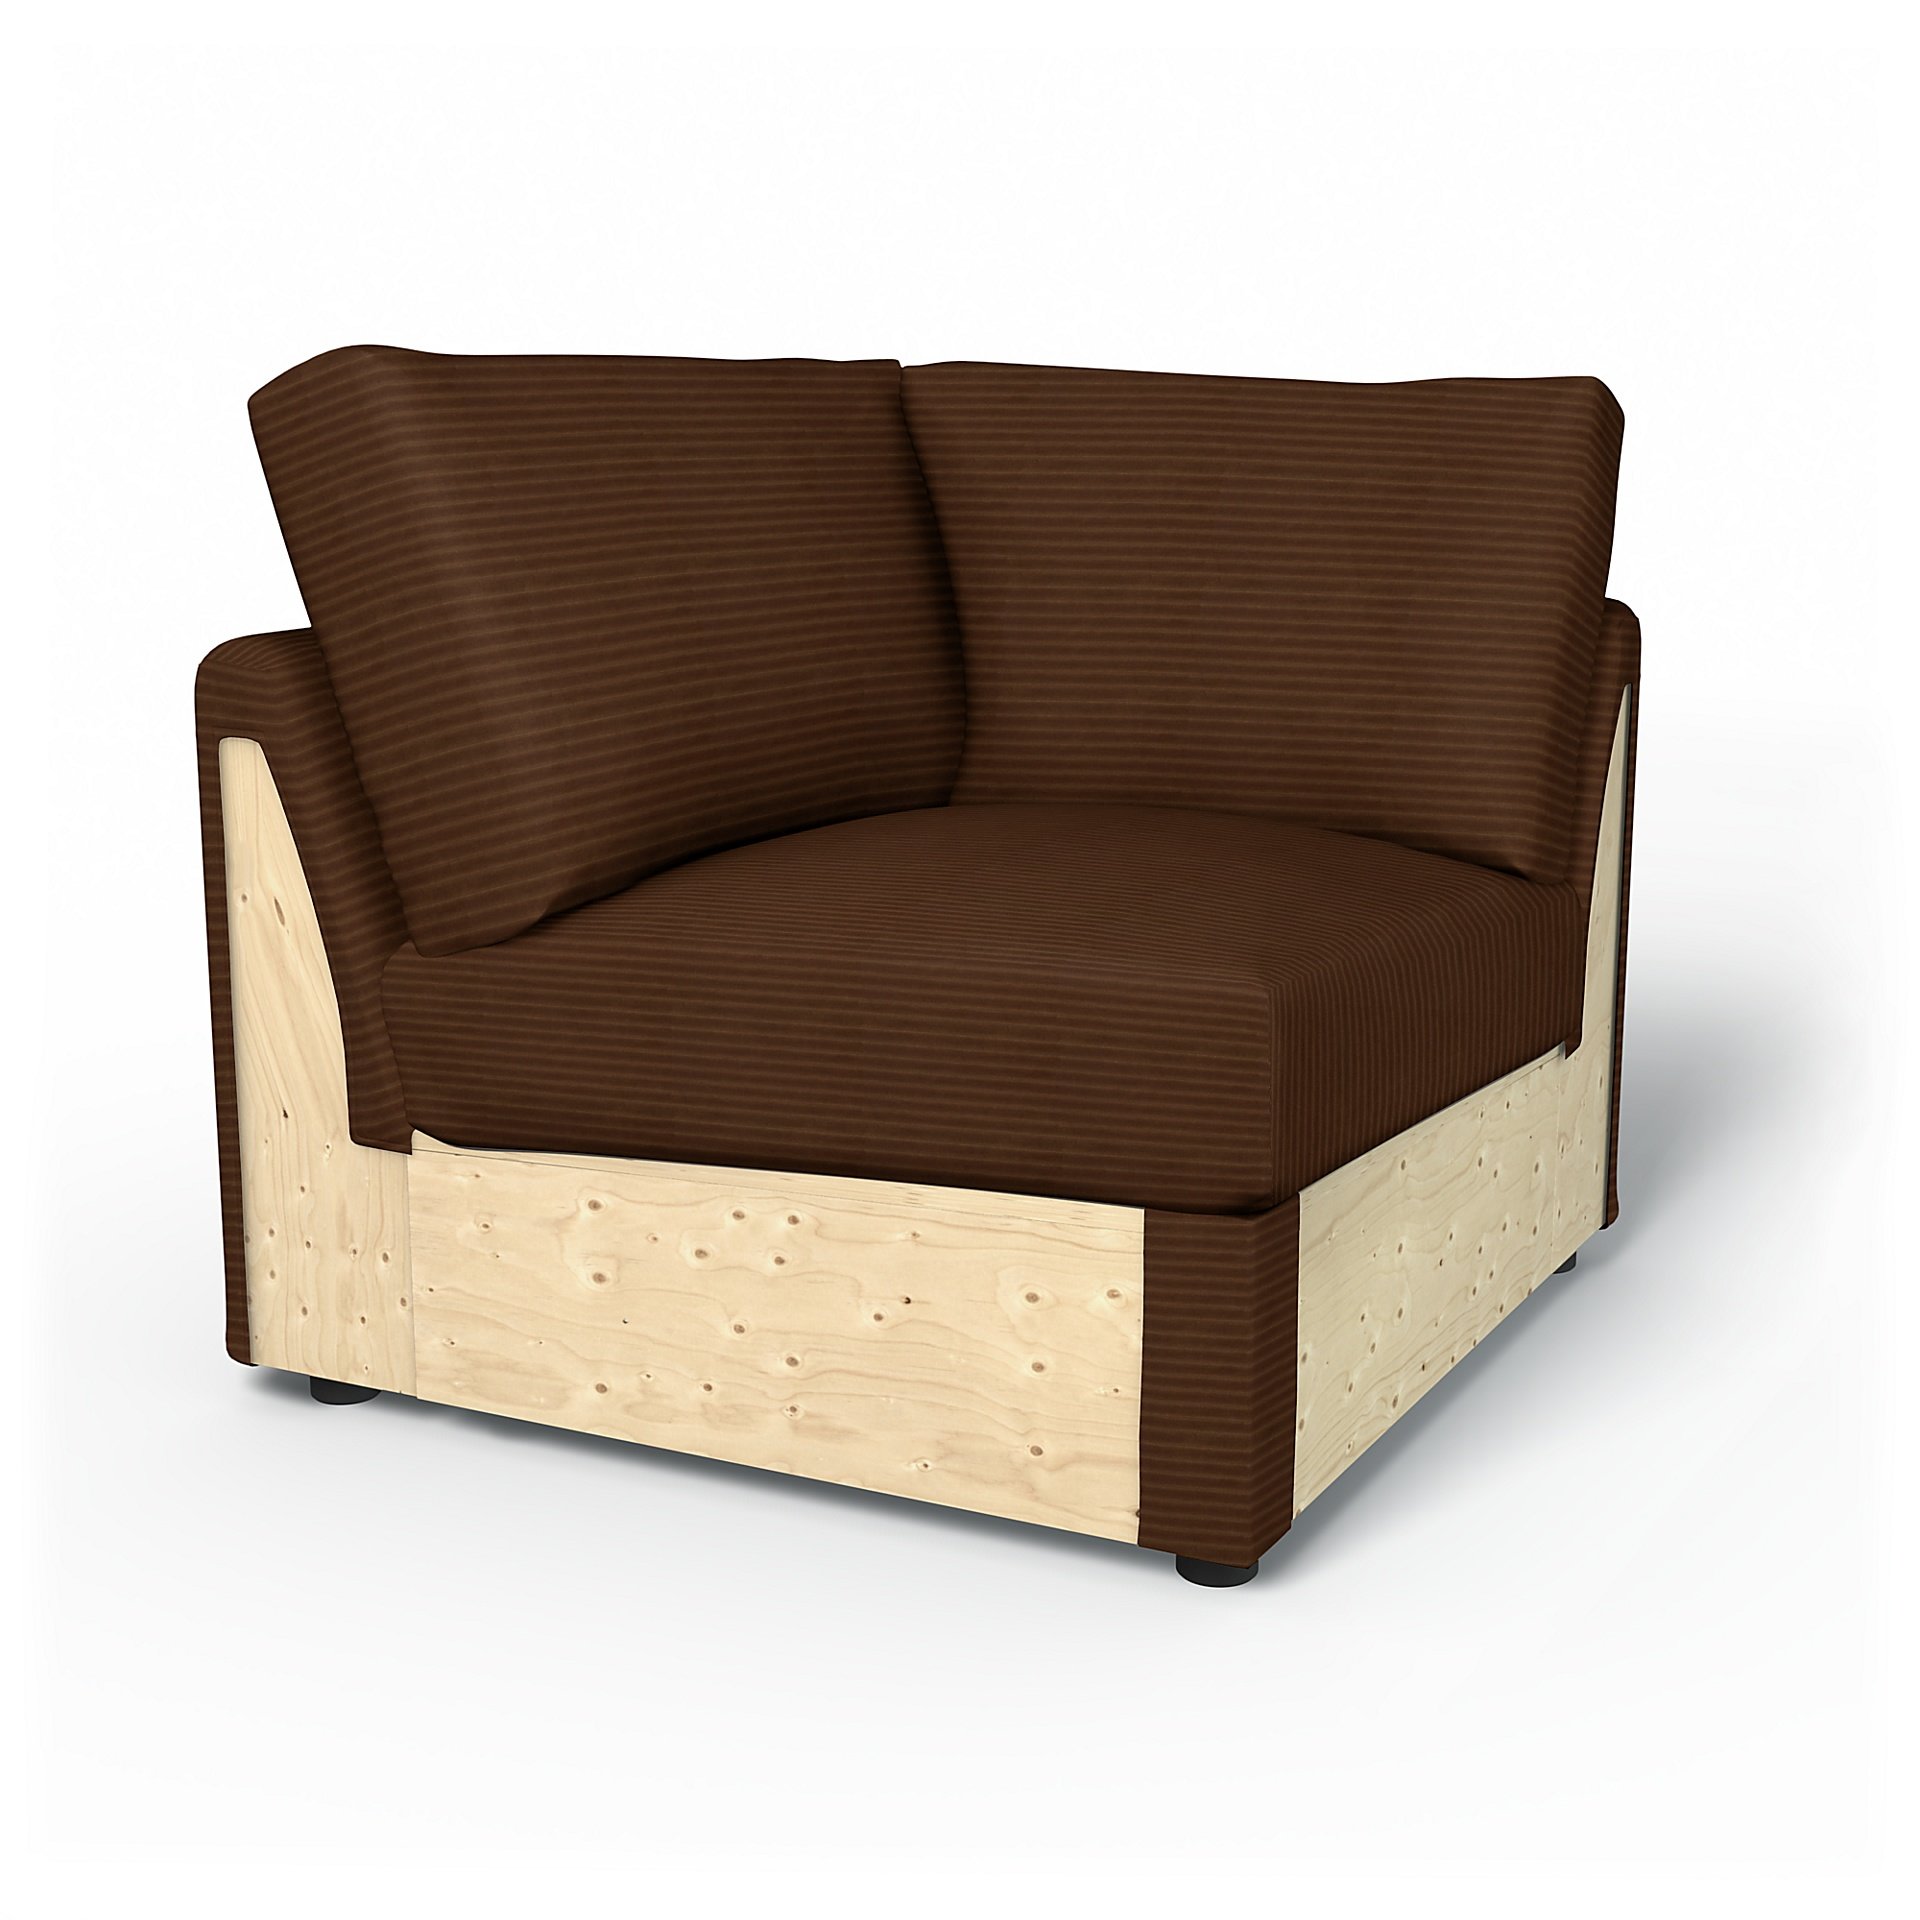 IKEA - Vimle Corner Section Cover, Chocolate Brown, Corduroy - Bemz